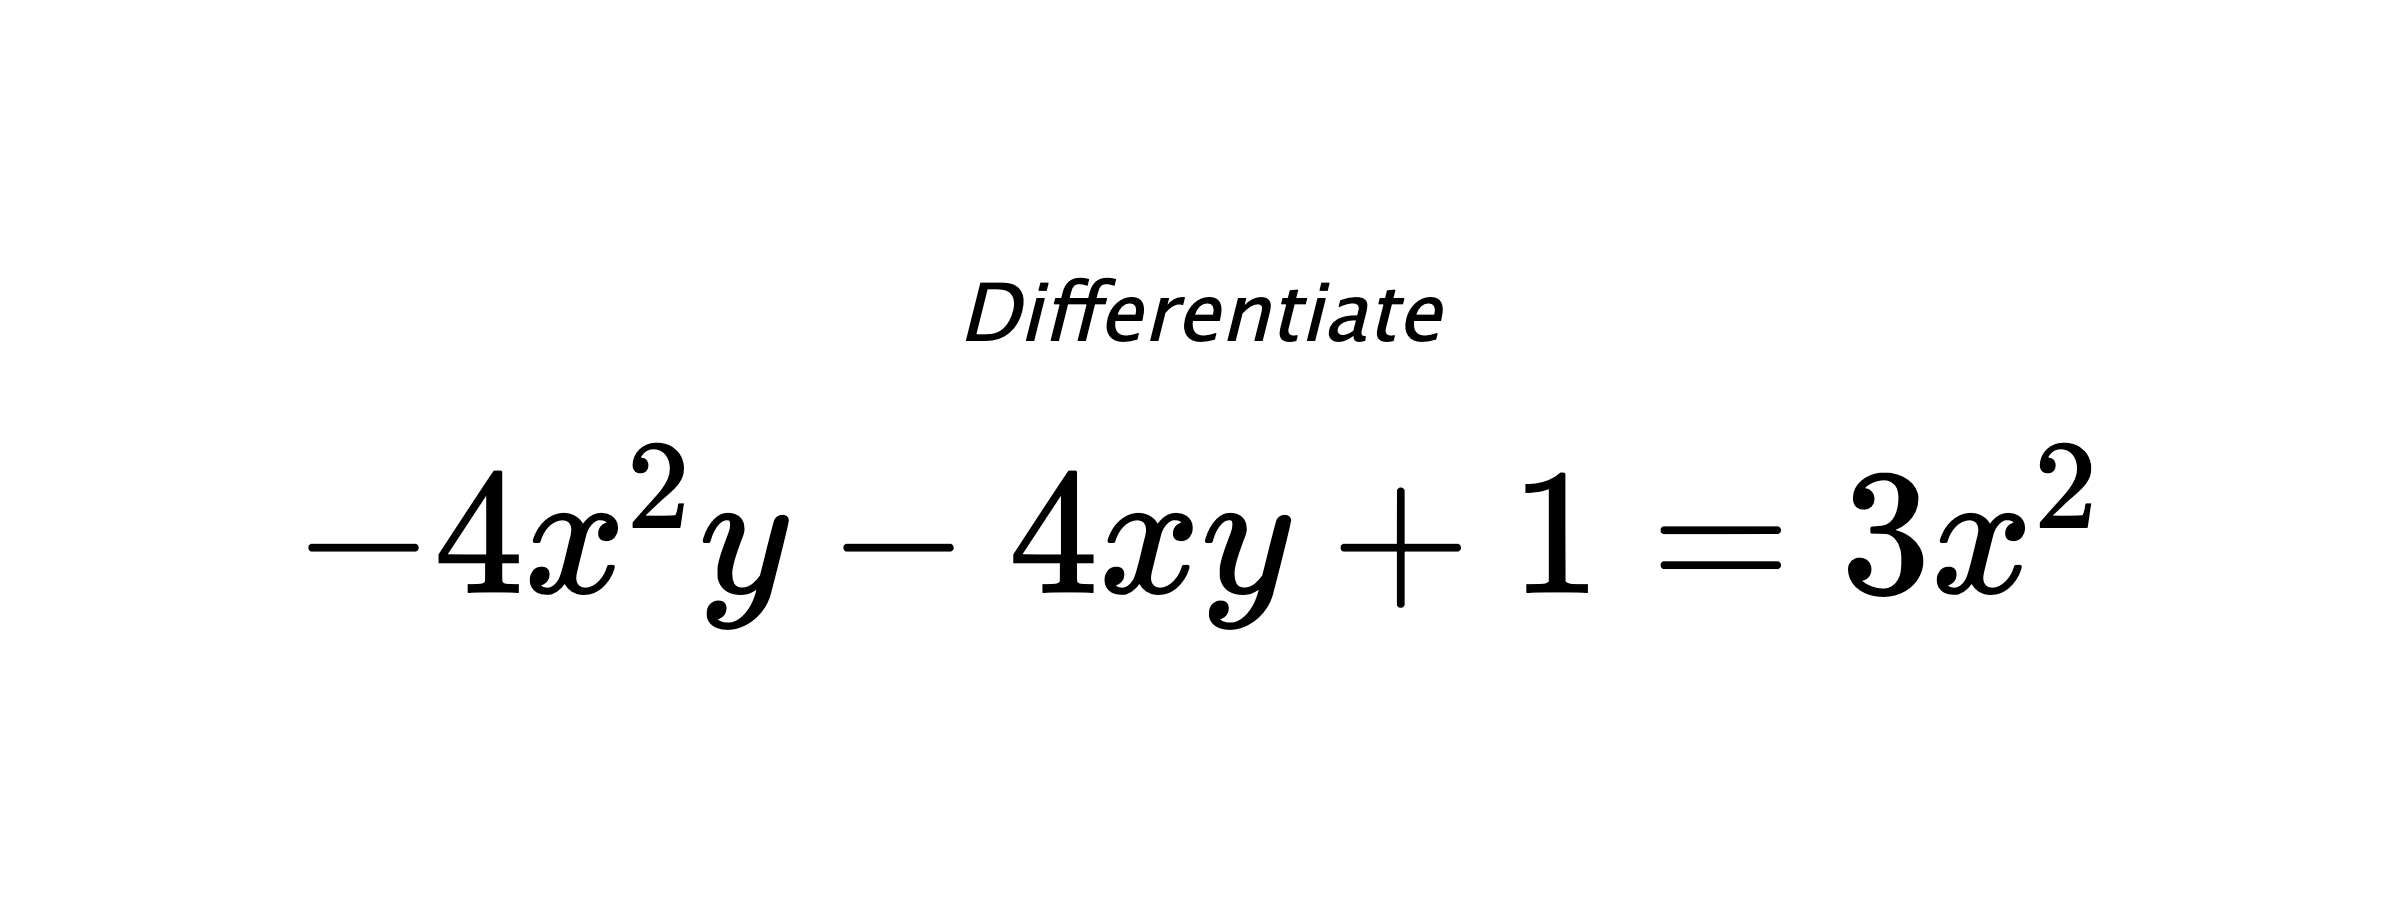 Differentiate $ -4x^2y-4xy+1 = 3x^2 $